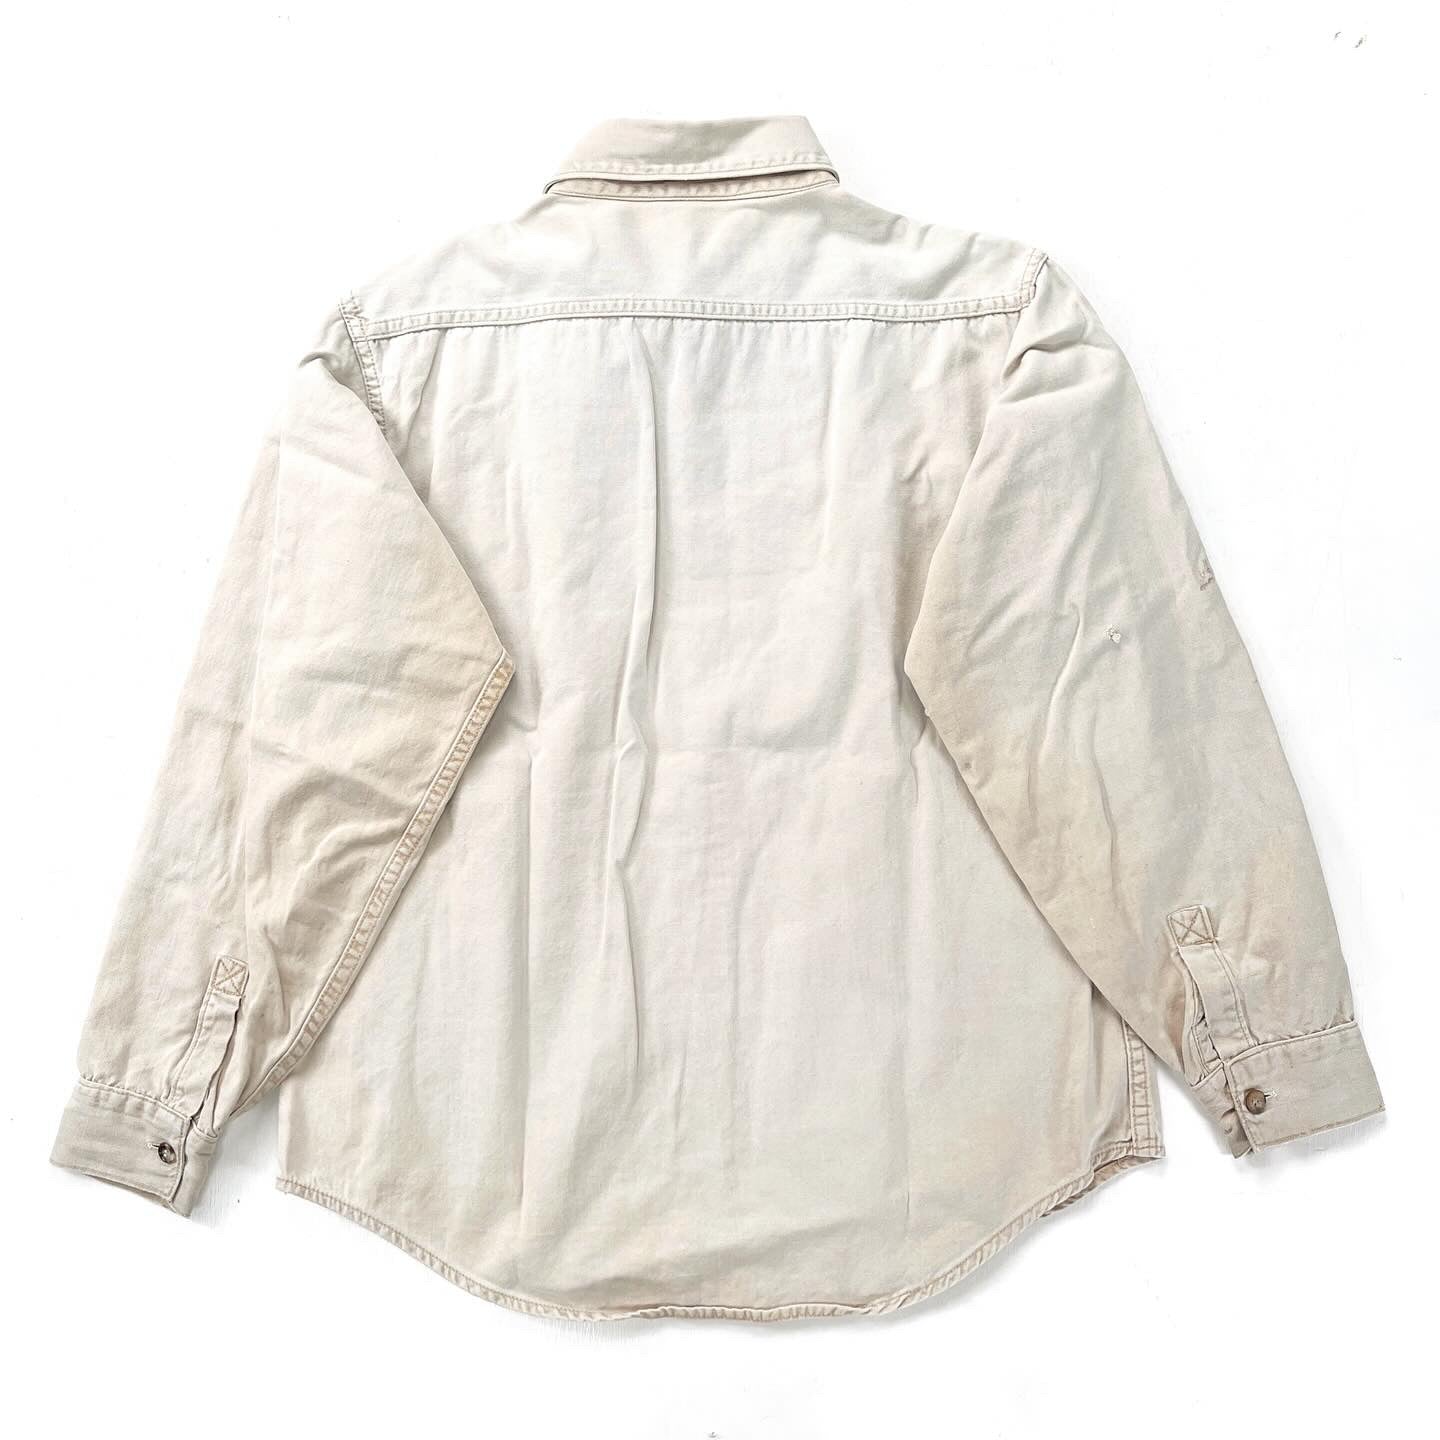 1970s Patagonia “Big Label” Original Cotton Canvas Shirt, Faded Tan (L)